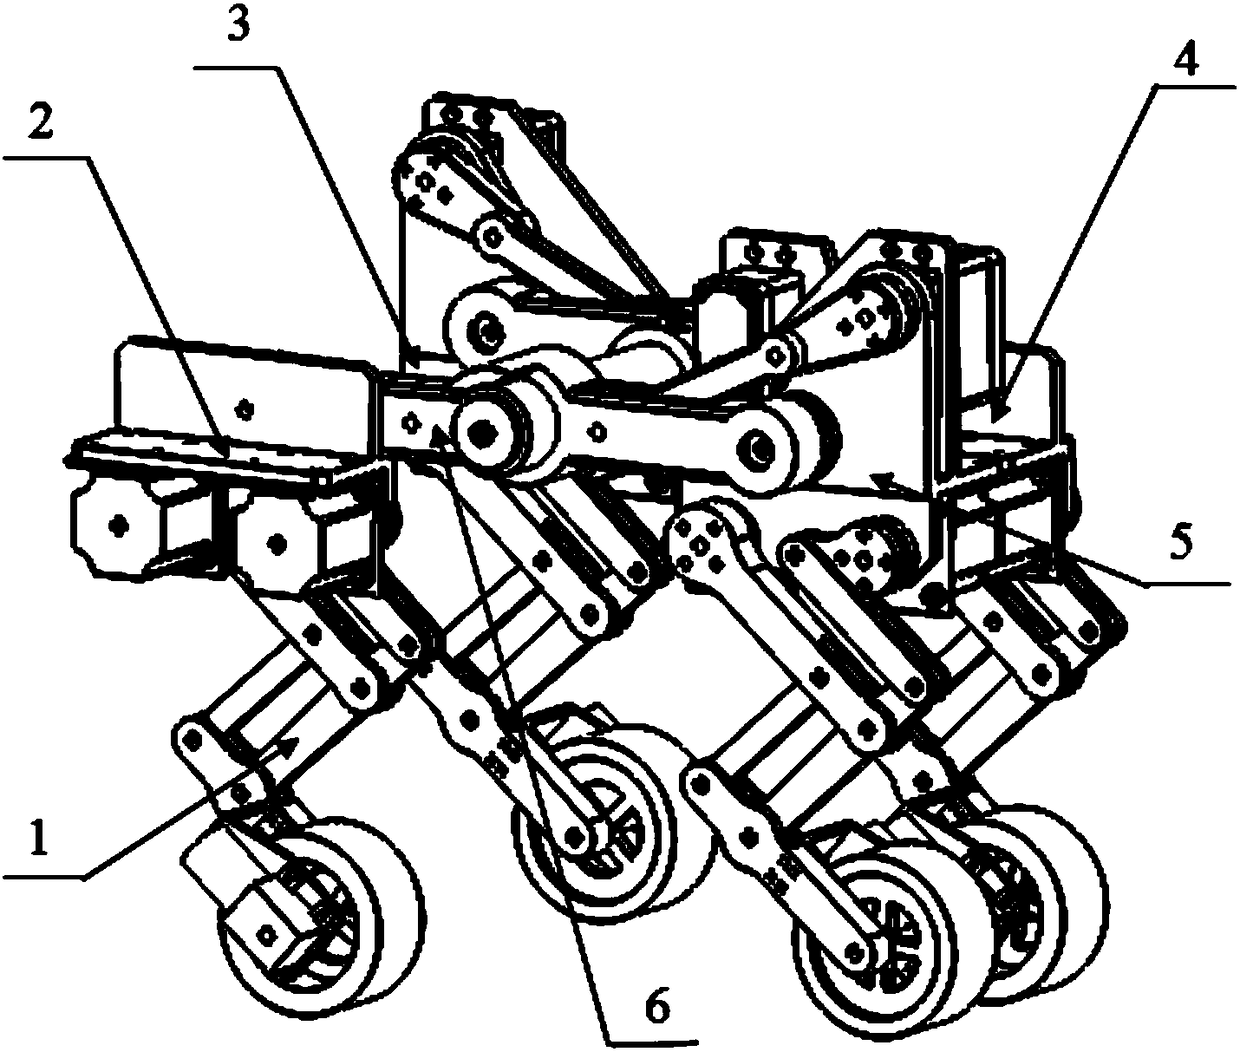 Wheel-legged robot with multiple walking modes